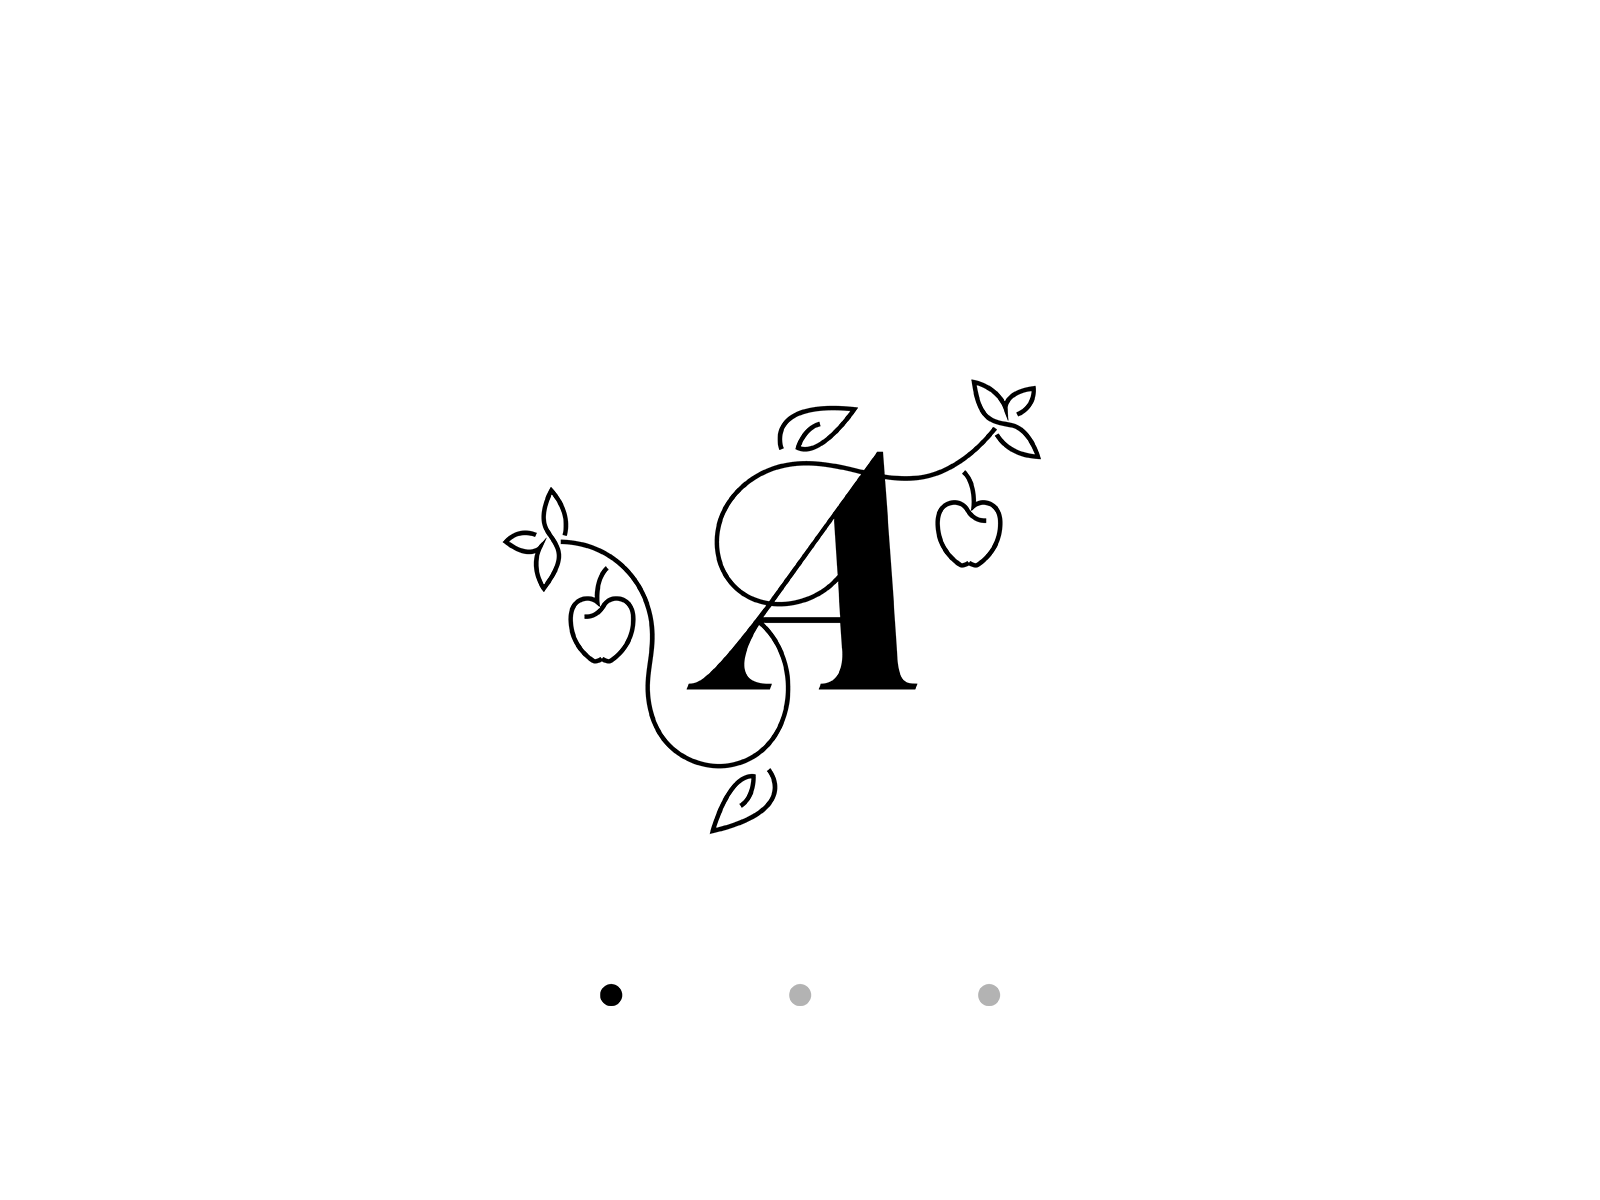 ABC Alphabets Design alphabets apple ball banana cat cherry graphic design letters logo design minimal logo modern logo words